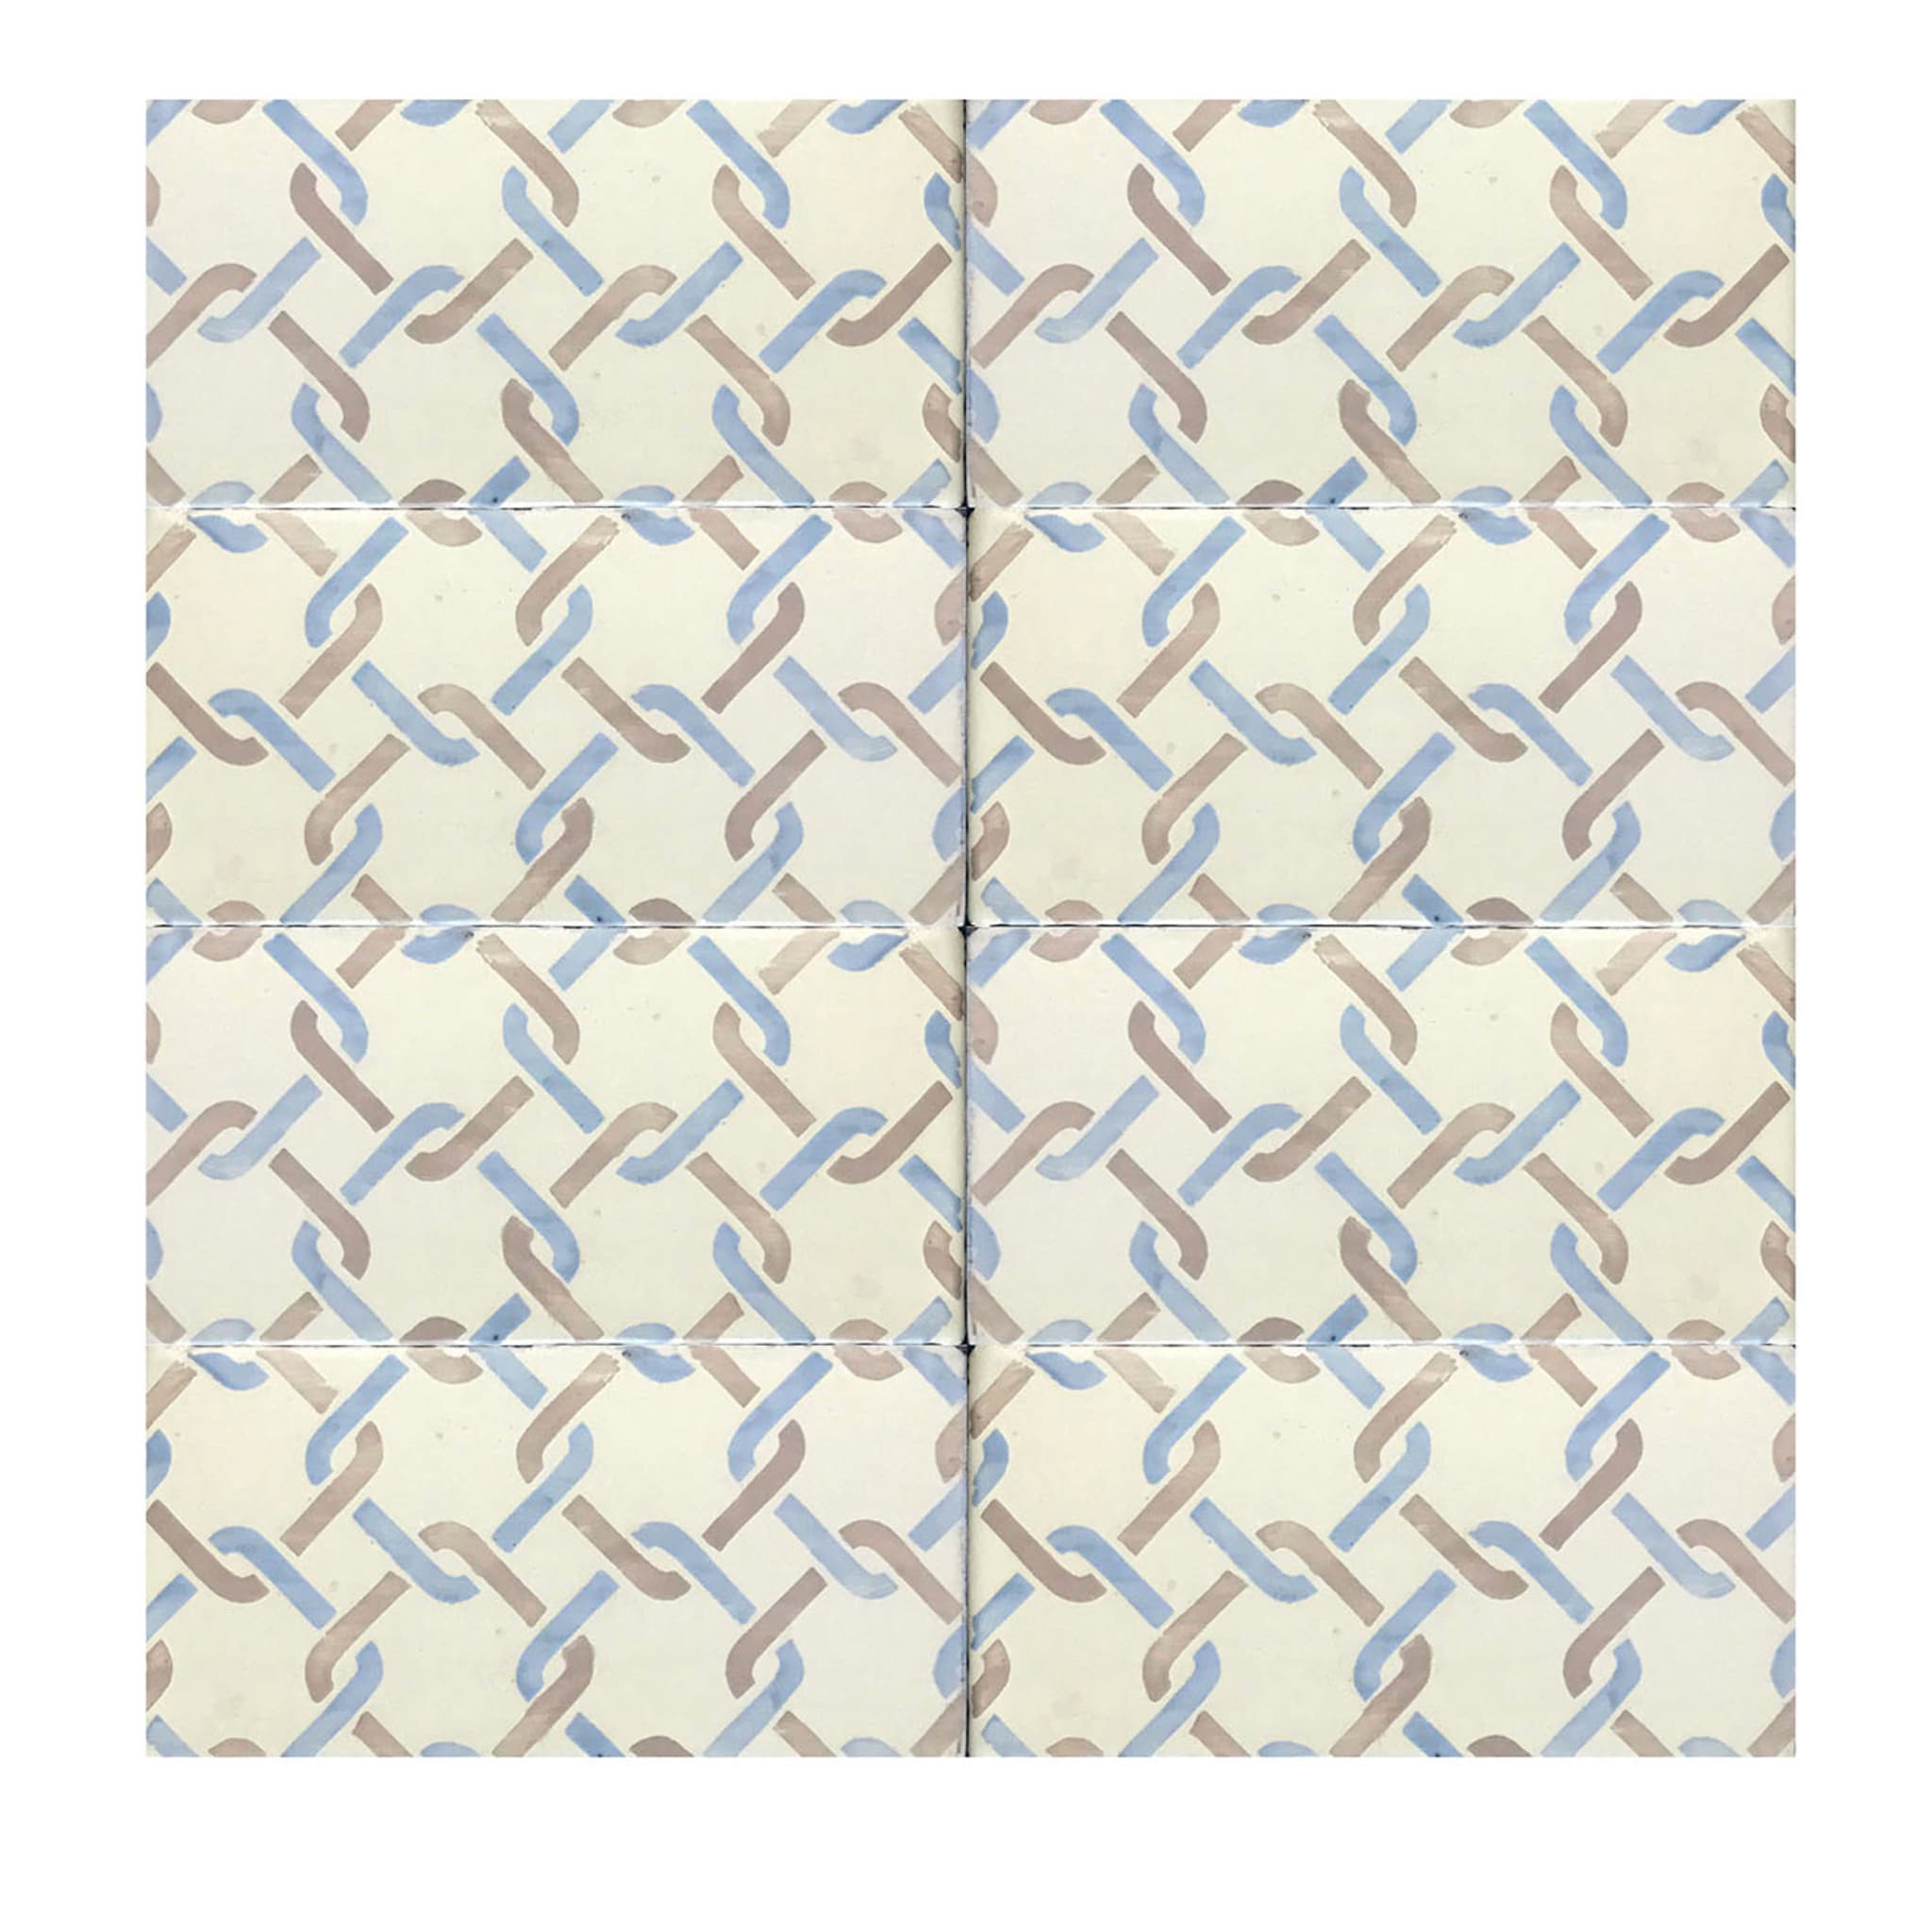 Daamè Set of 50 Rectangular Ivory Tiles #1 - Main view